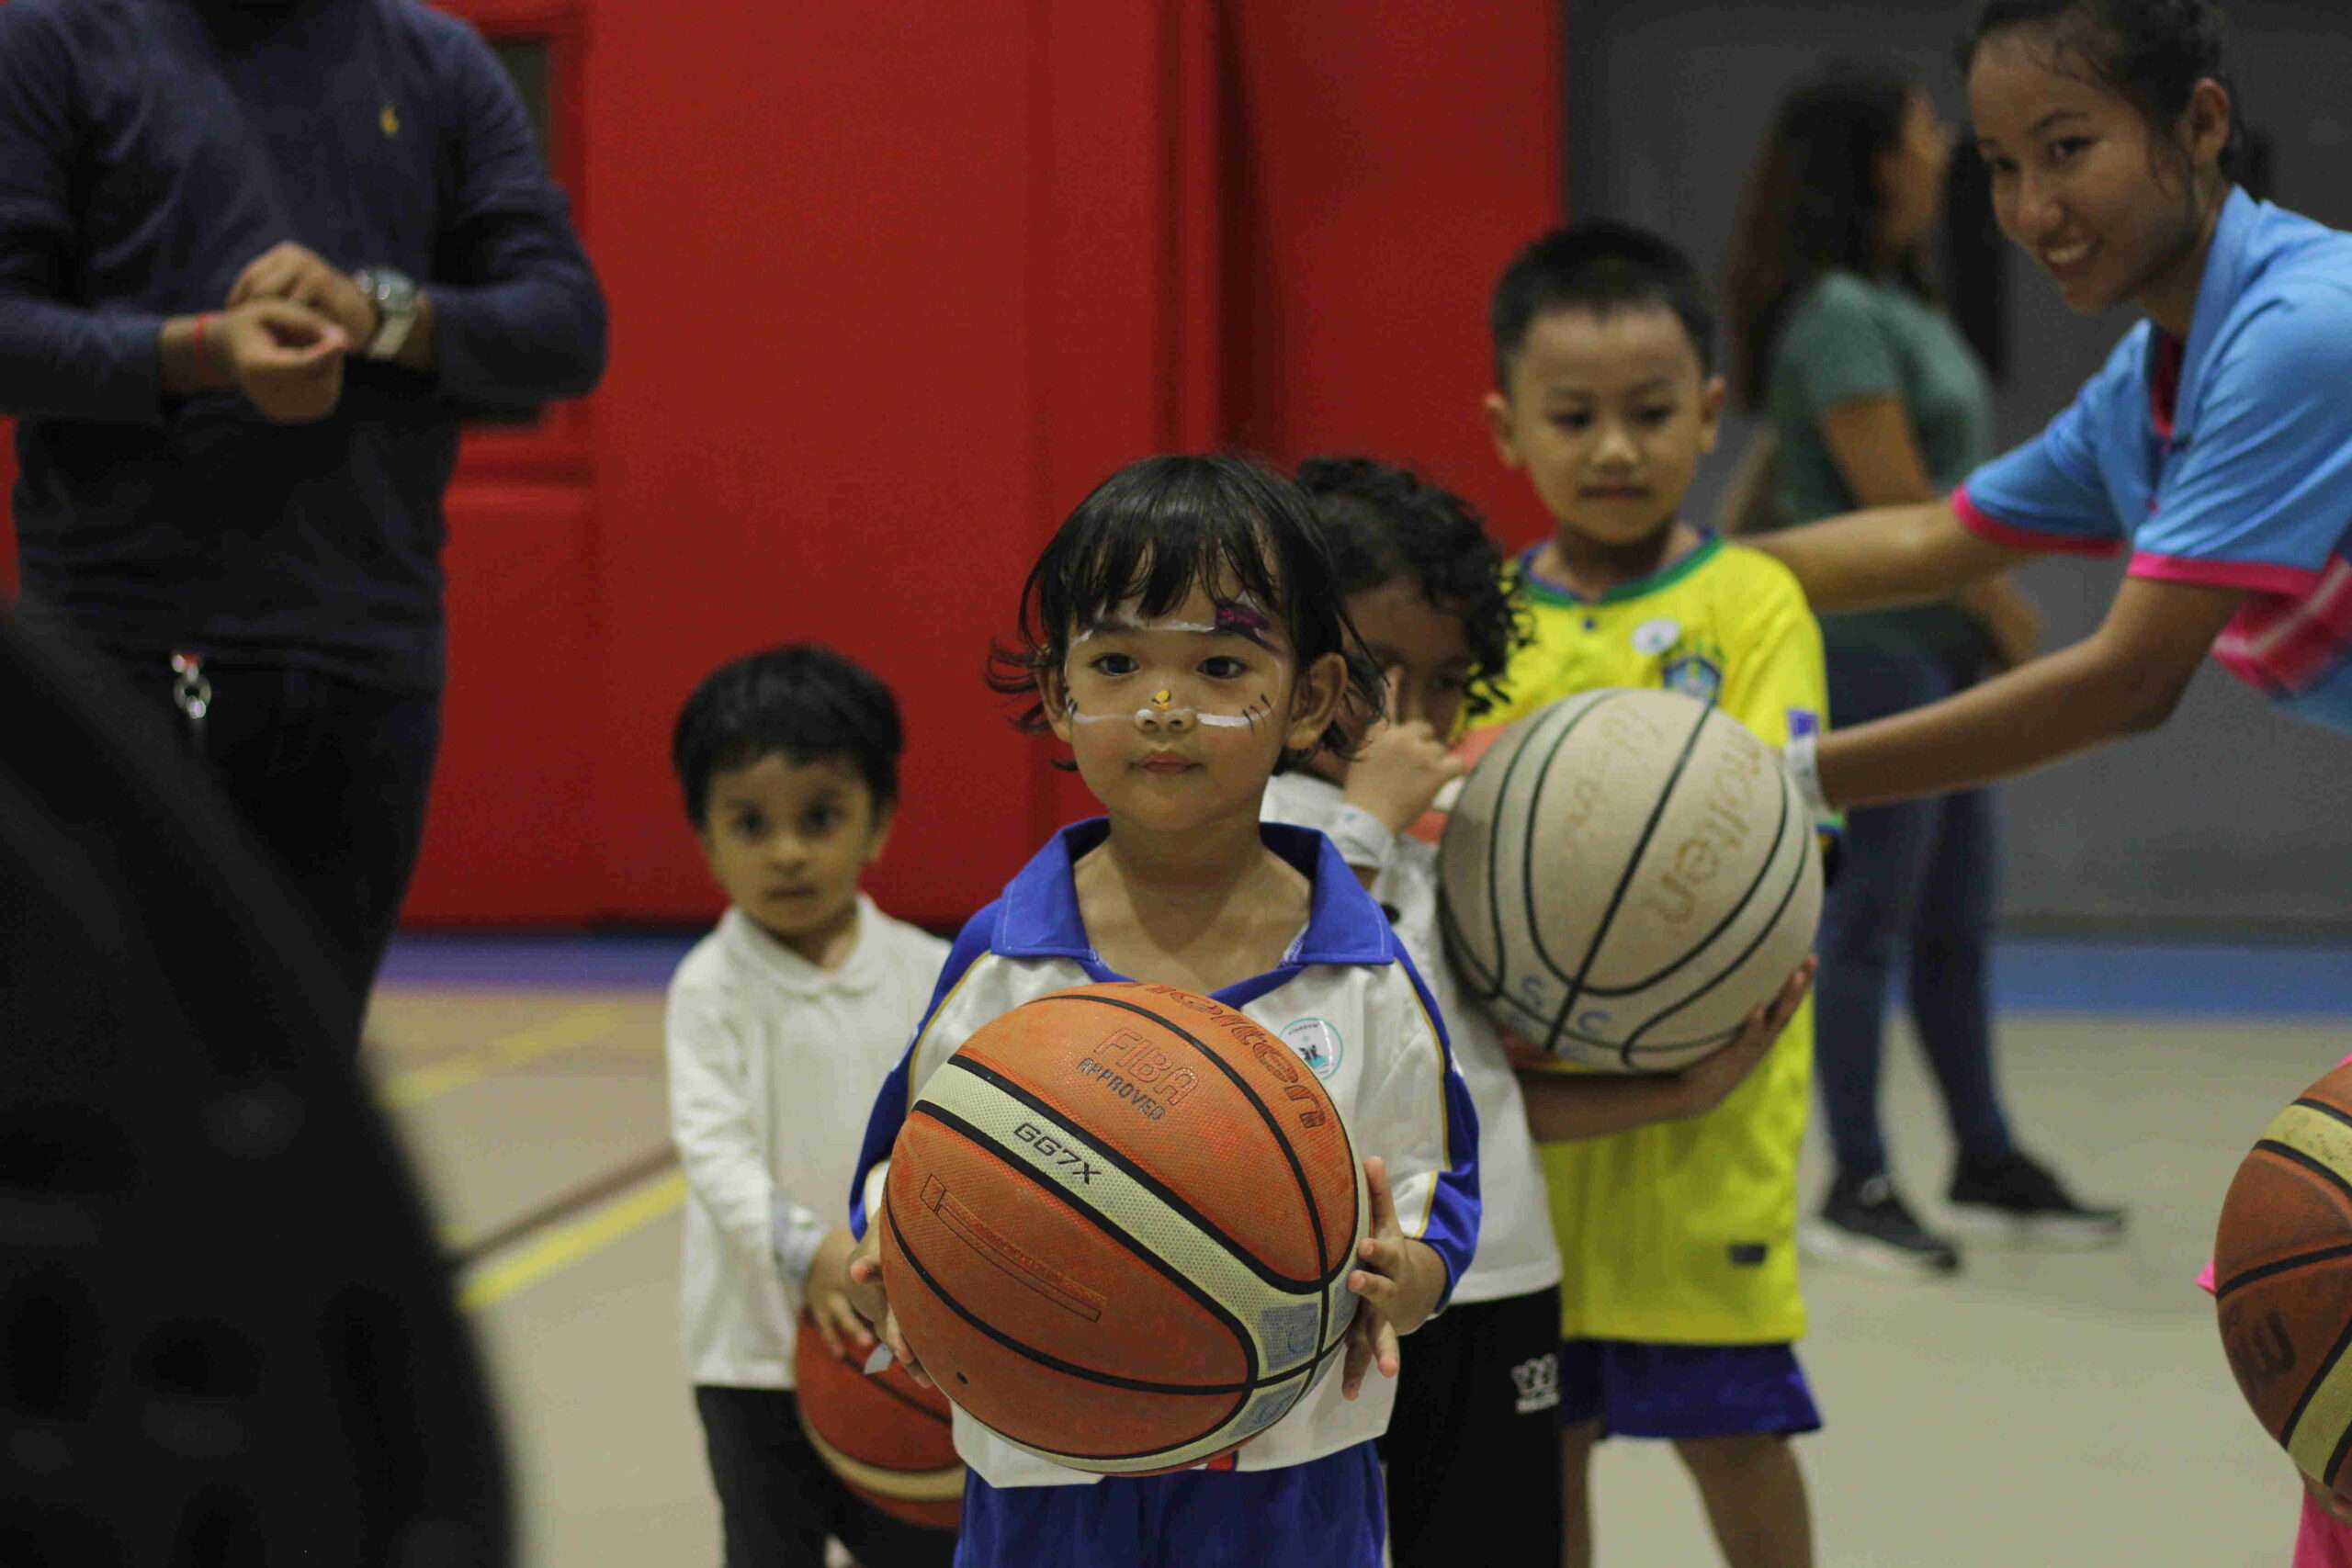 a group of children holding basketballs